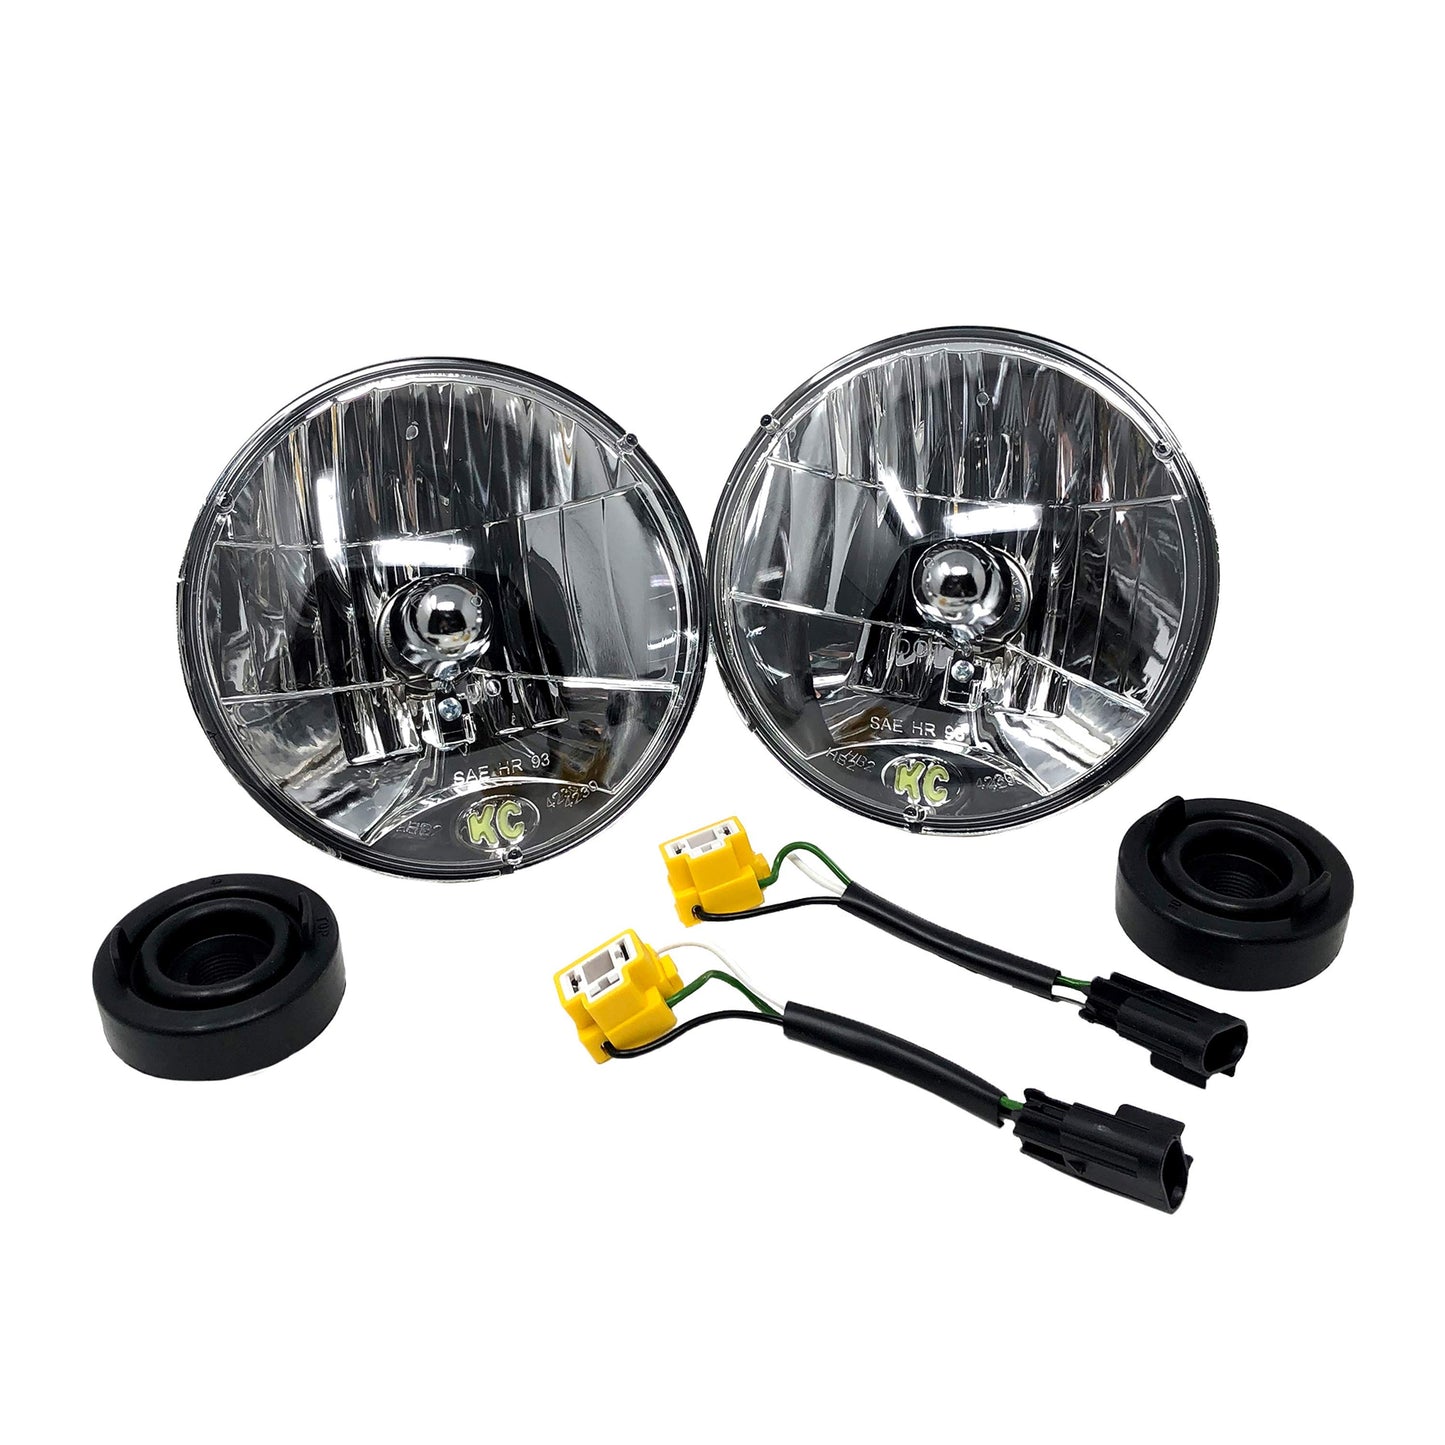 7" Headlight - H4 Halogen - 2-Lights - 55W / 60W DOT Headlight - for 07-18 Jeep JK